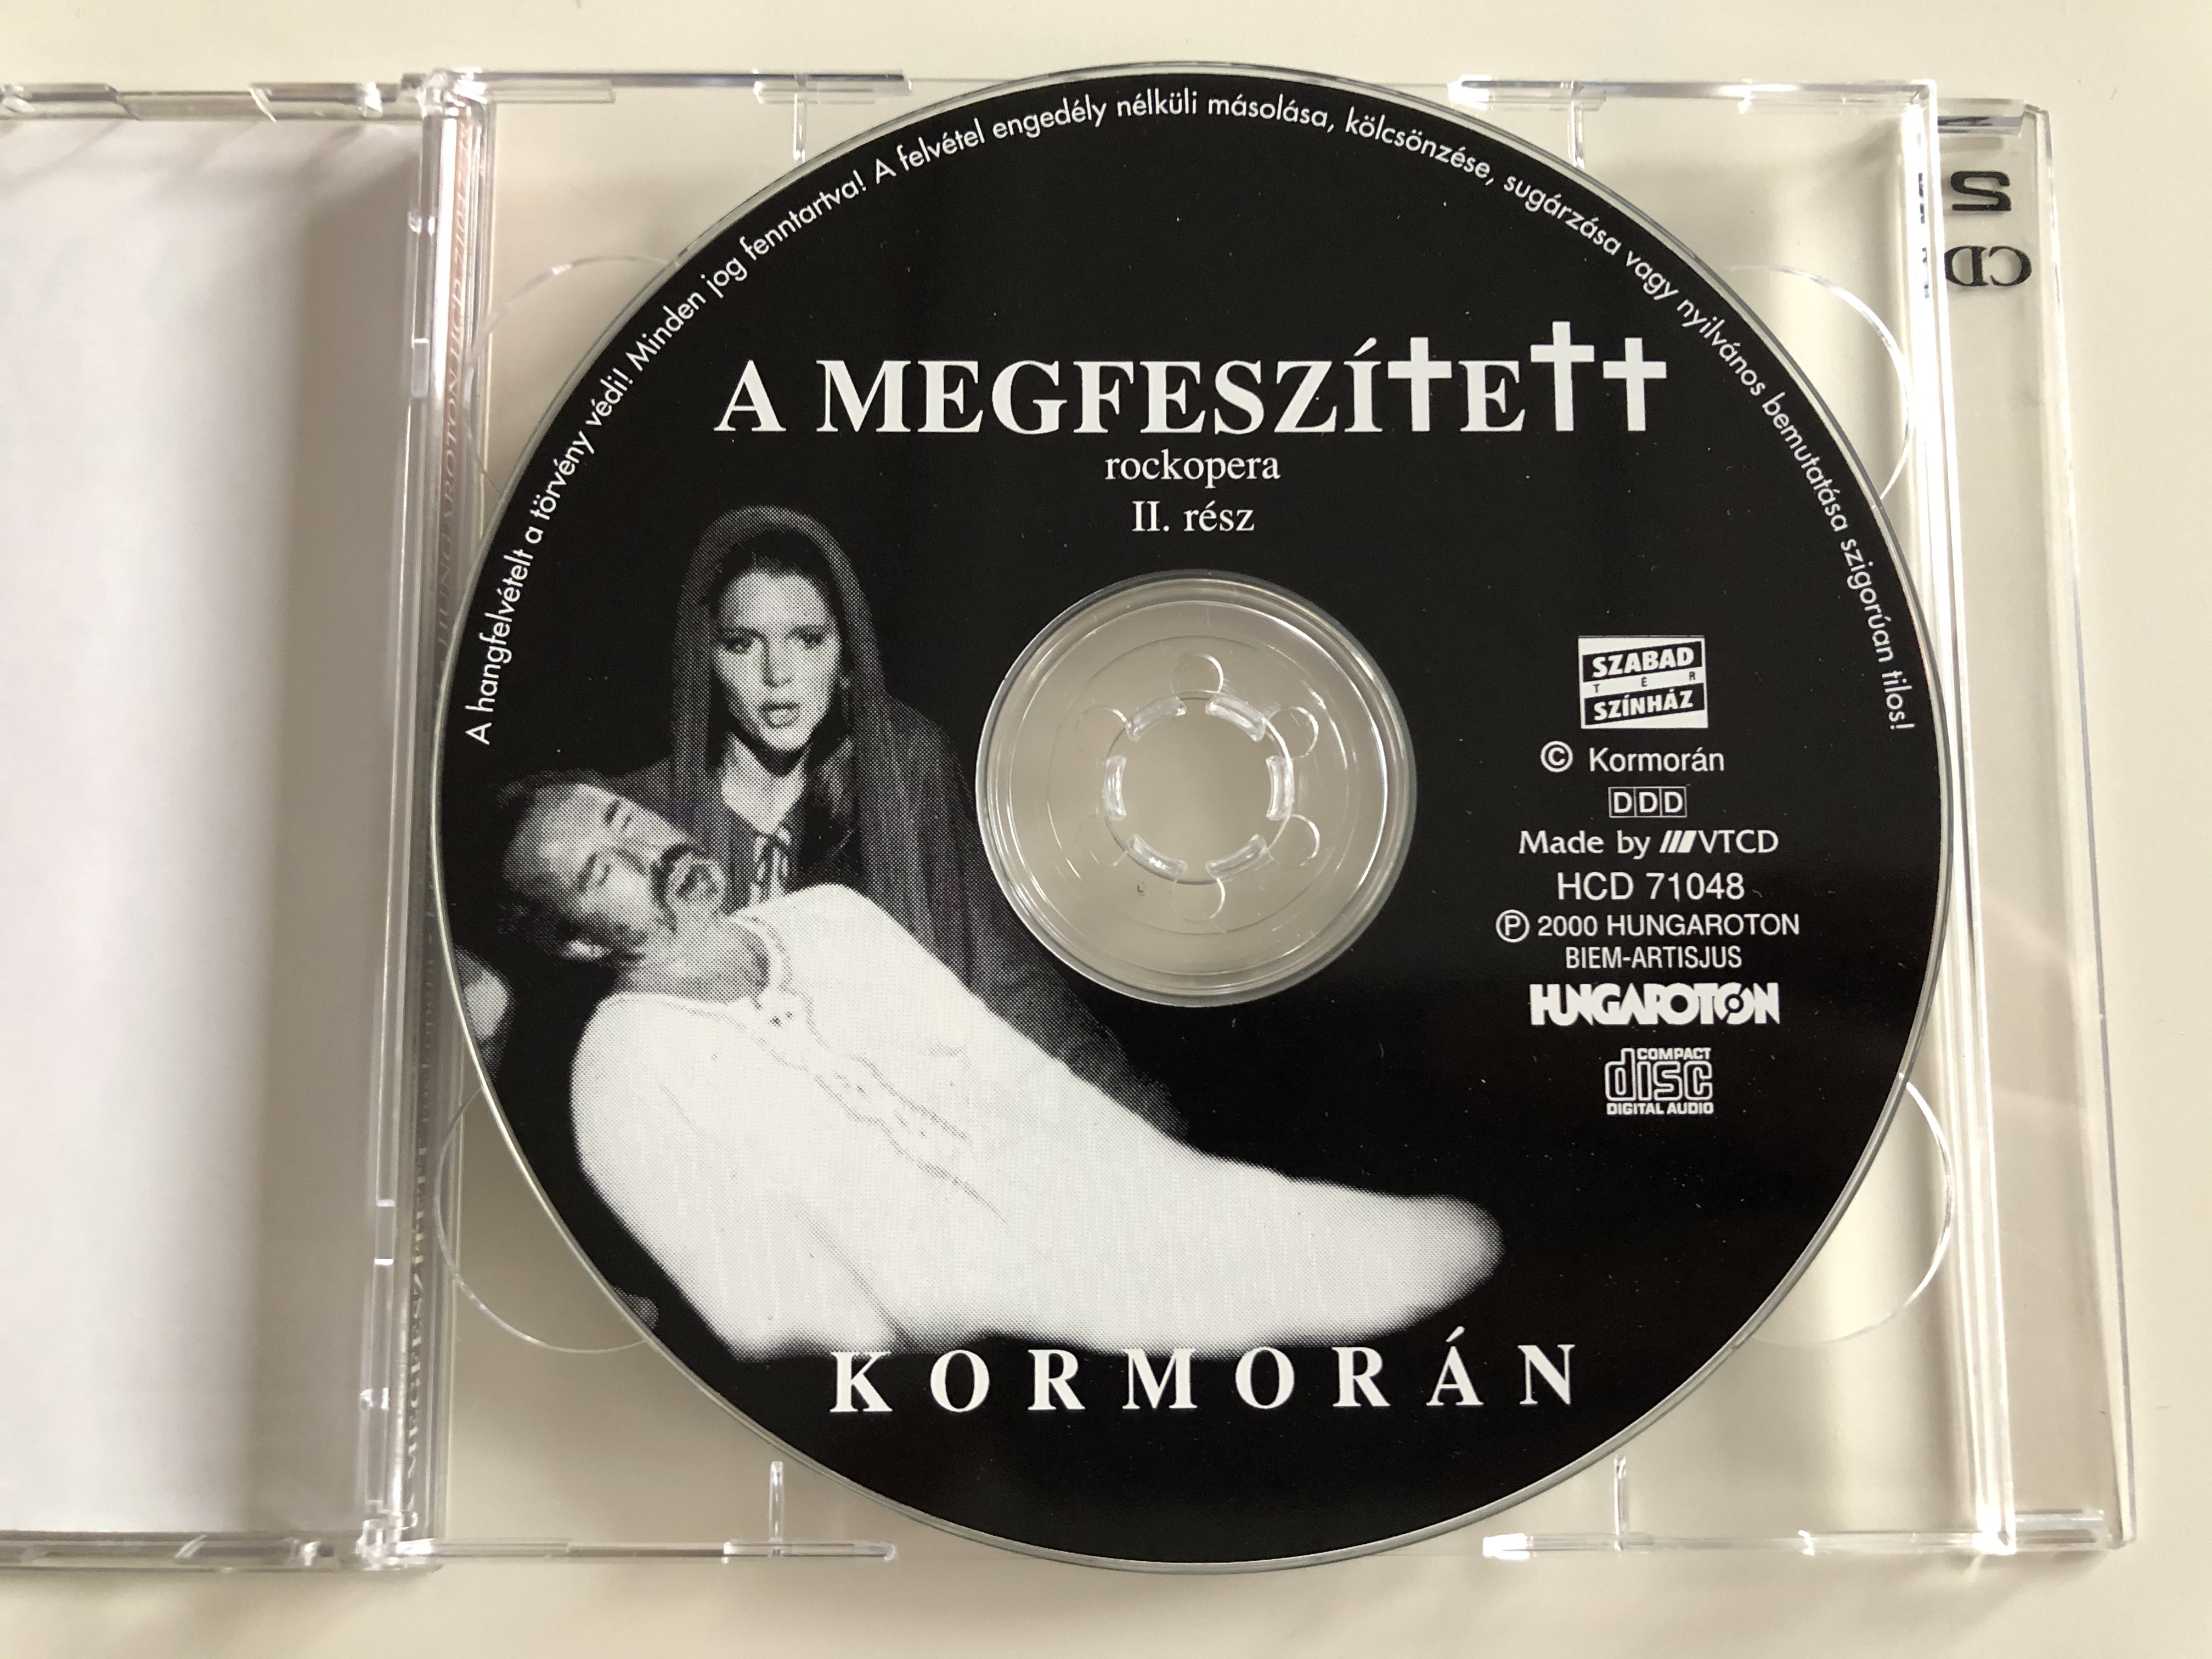 a-megfesz-tett-rockopera-kormor-n-hungaroton-2x-audio-cd-2000-hcd-71047-hcd-71048-9-.jpg